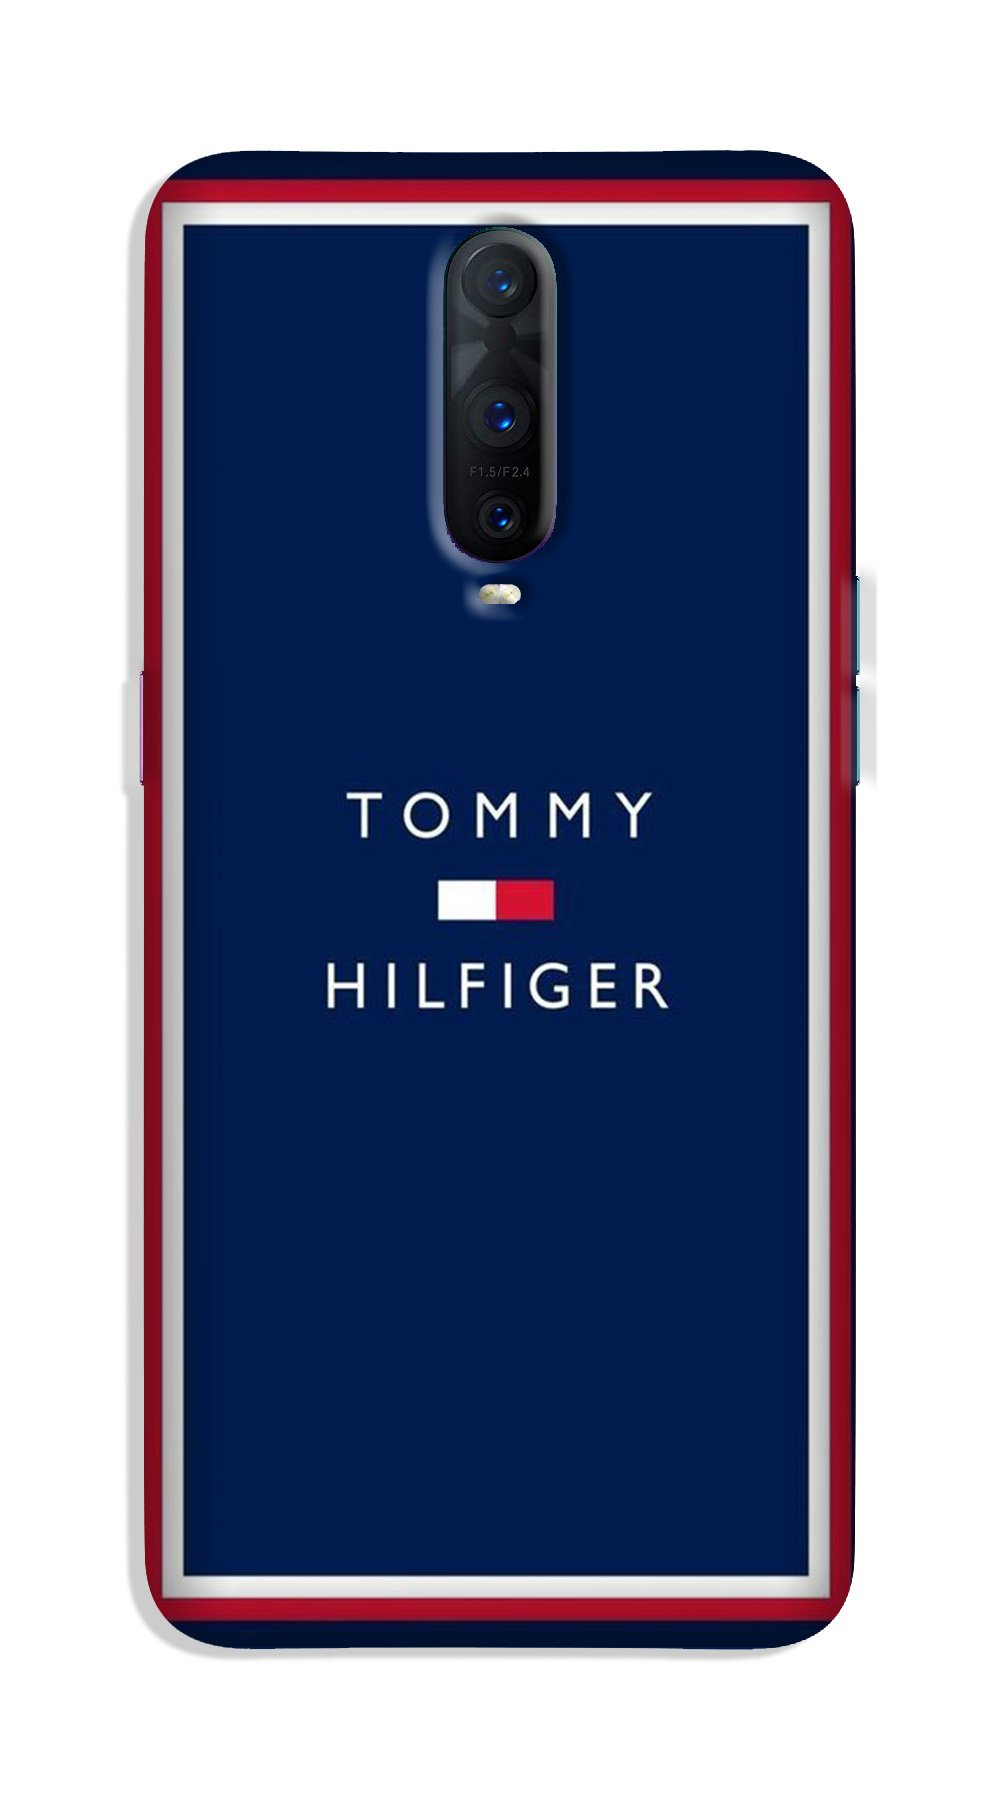 Tommy Hilfiger Case for Oppo R17 Pro (Design No. 275)